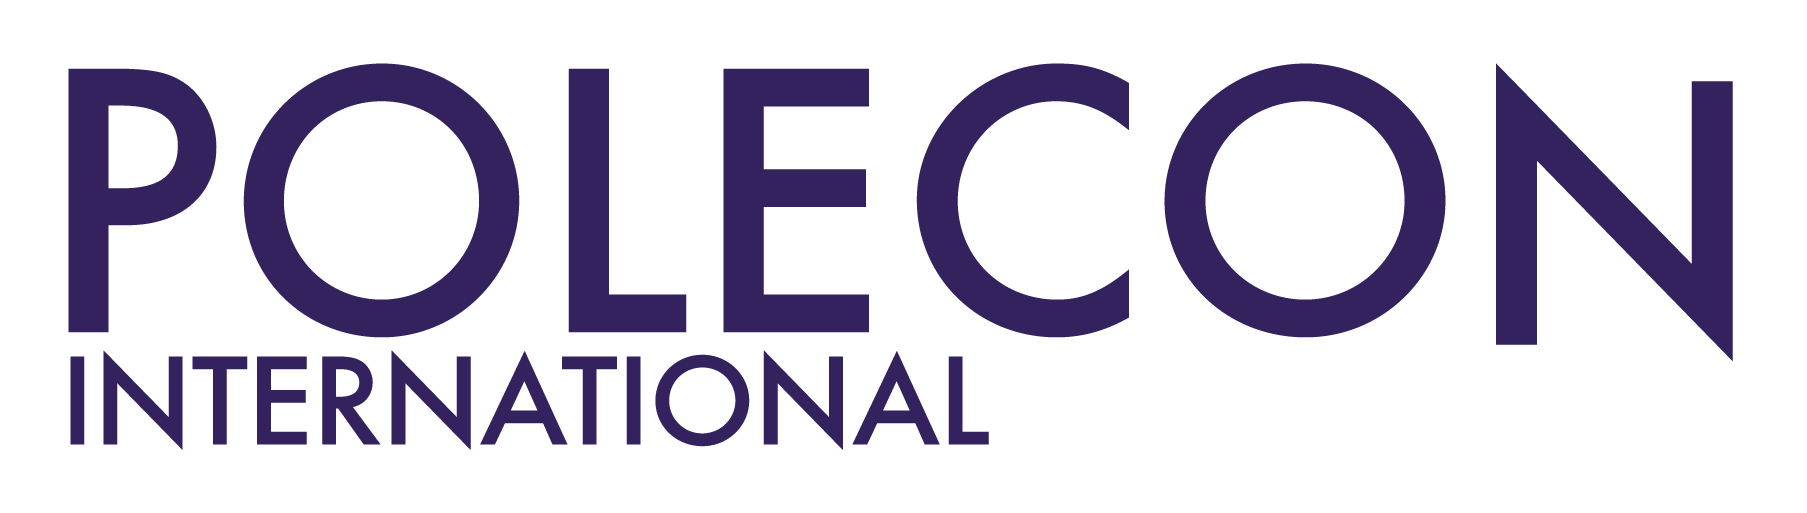 PoleCon International logo.